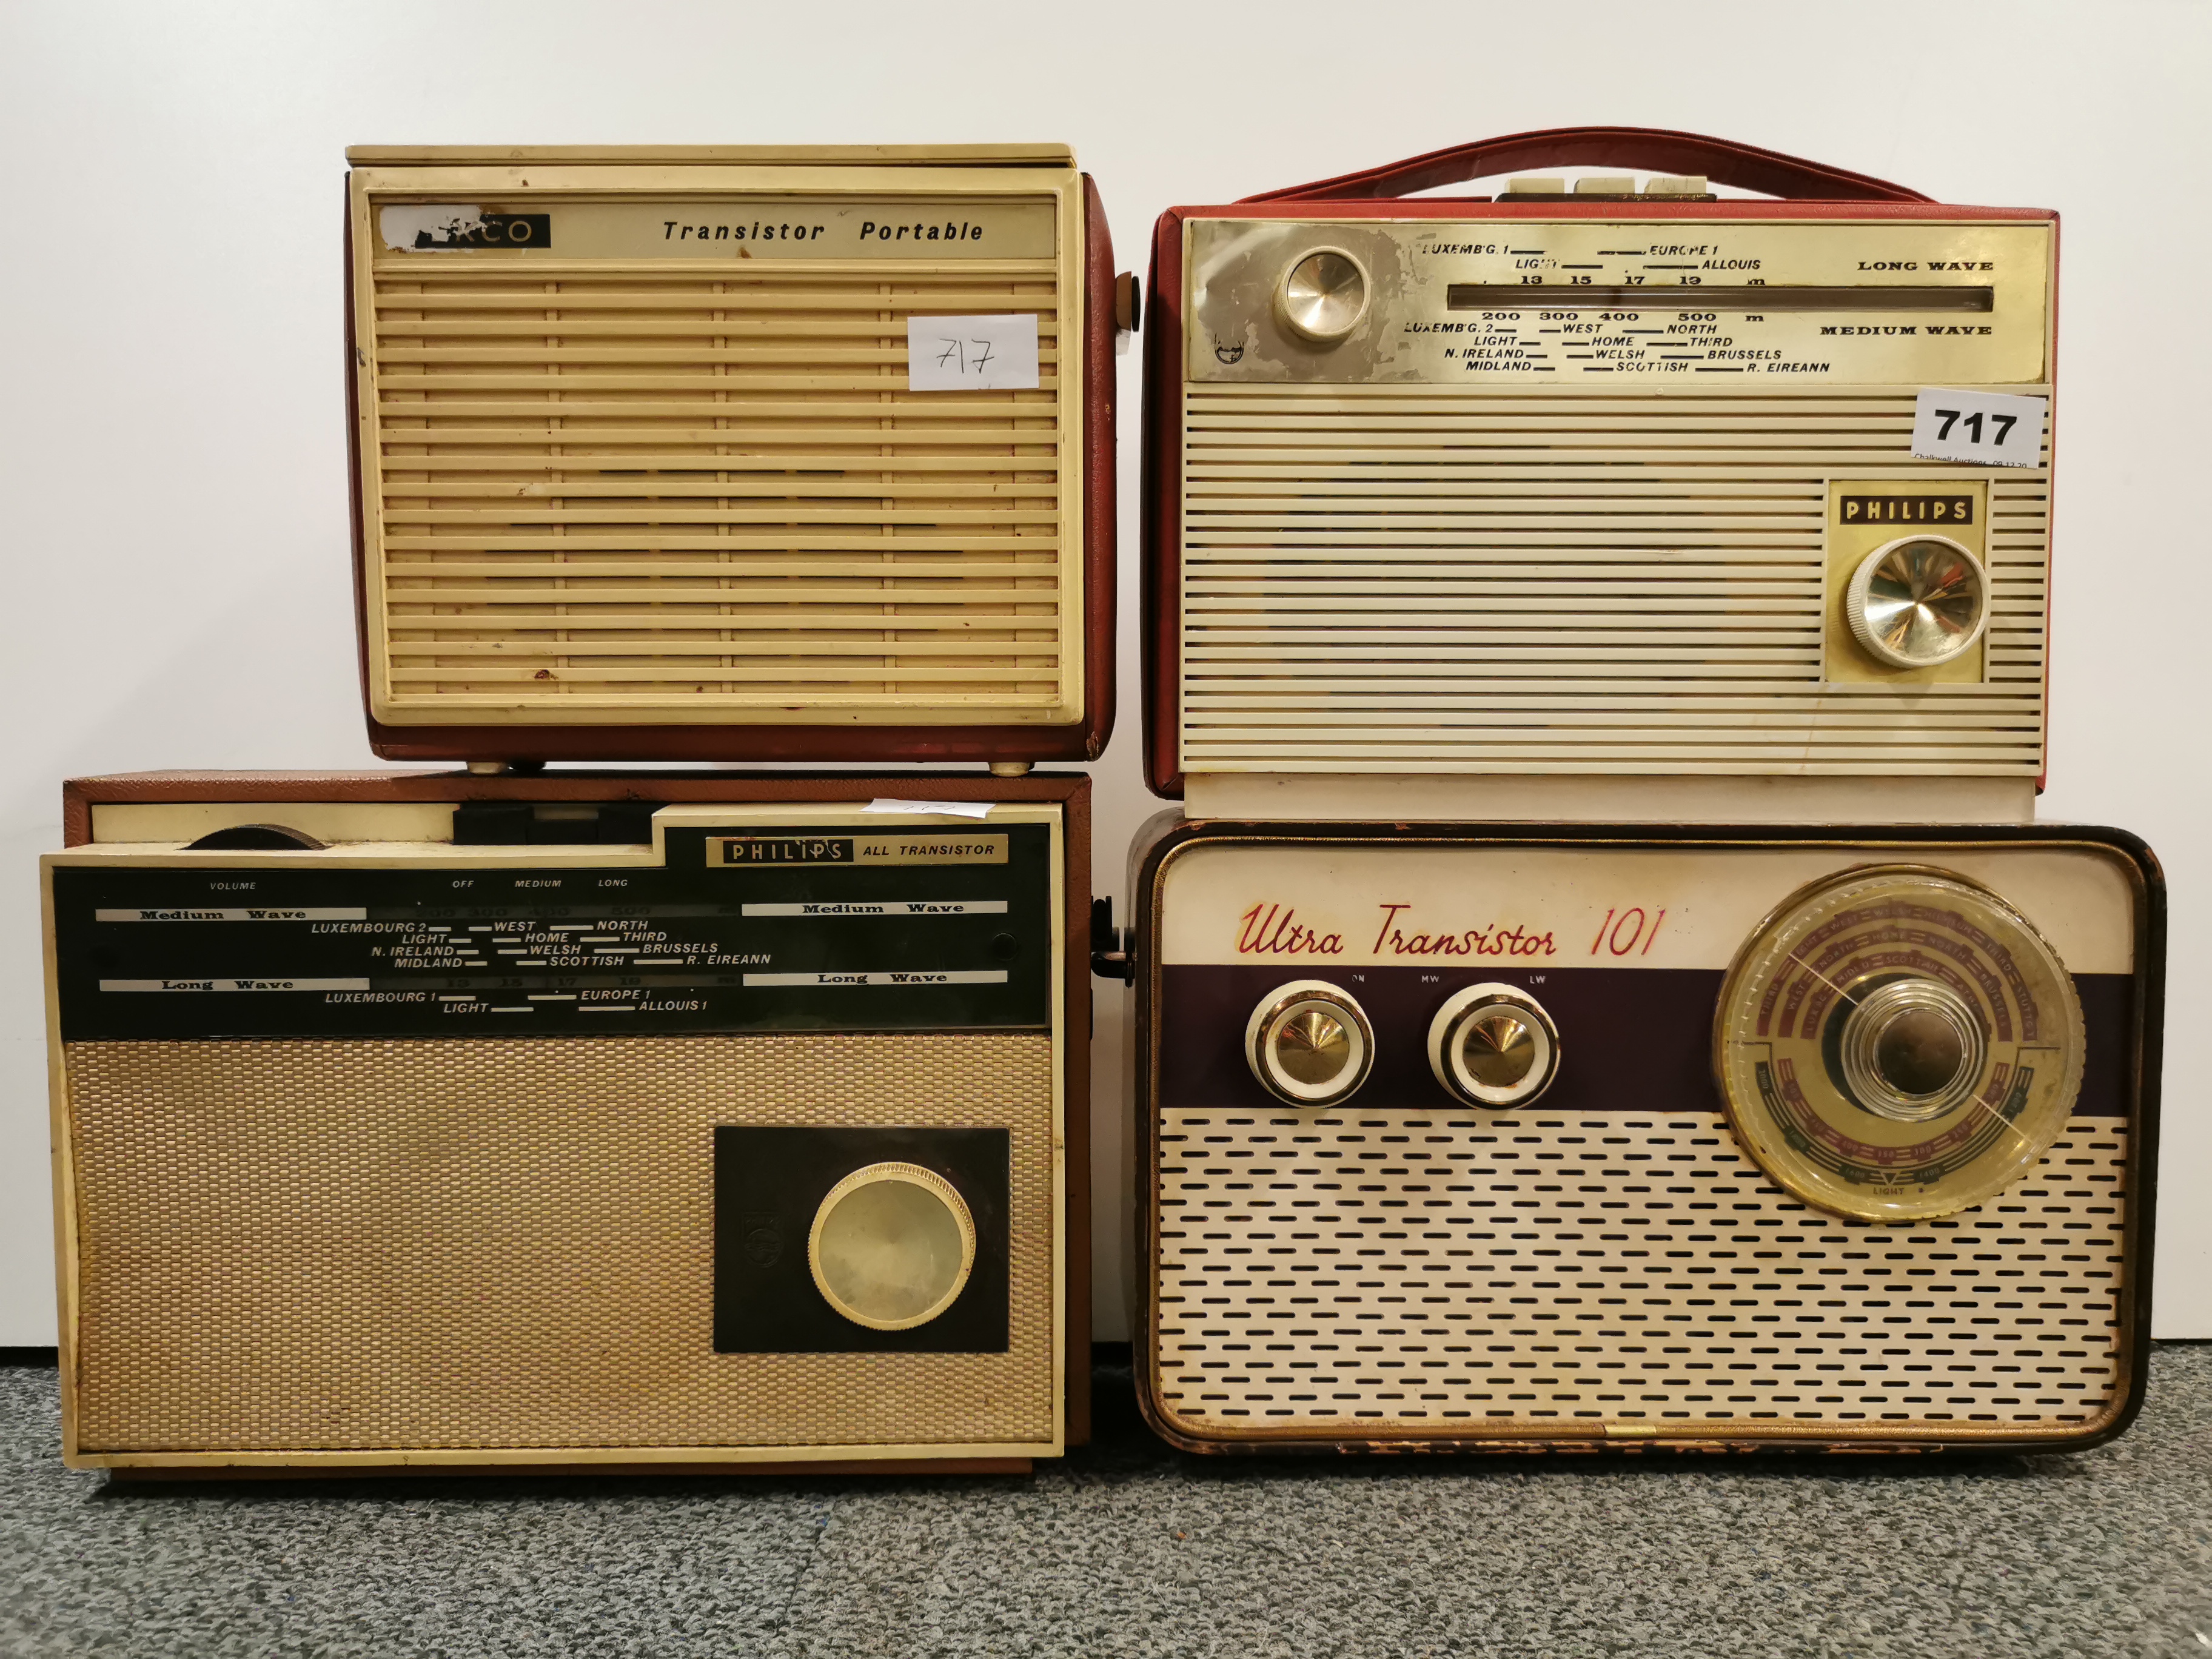 An Ekco portable transistor radios and three other vintage radios.